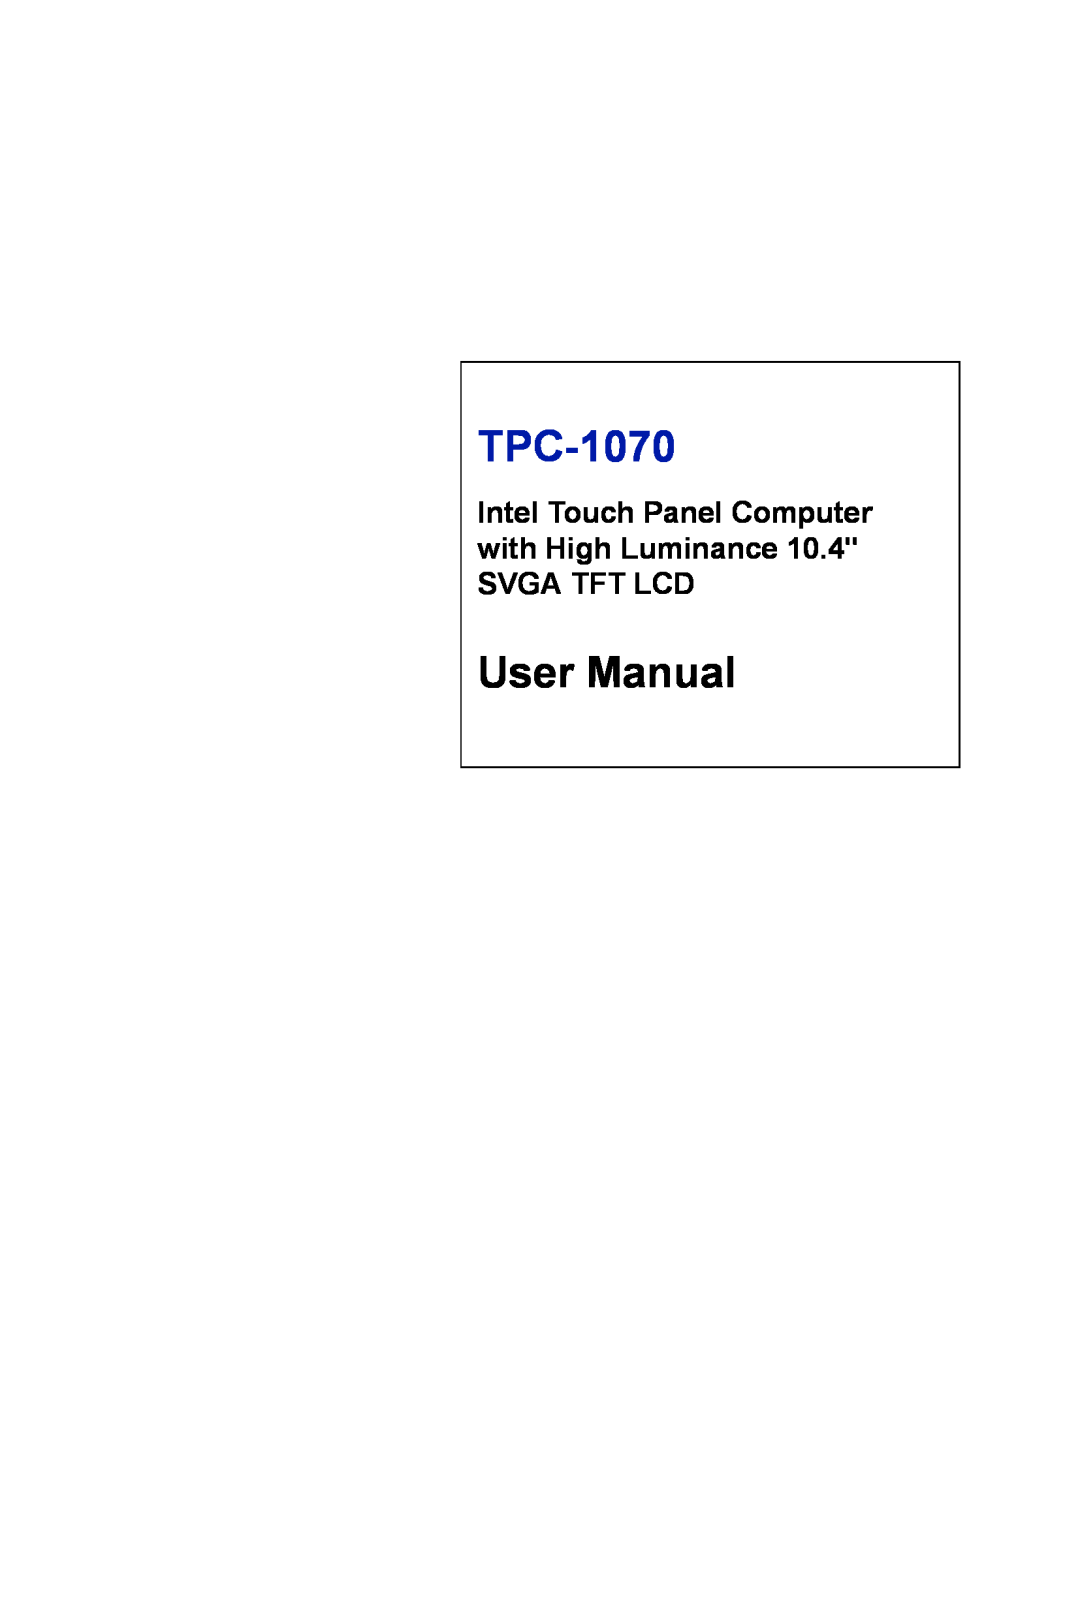 Intel TPC-1070 user manual User Manual, Intel Touch Panel Computer with High Luminance SVGA TFT LCD 